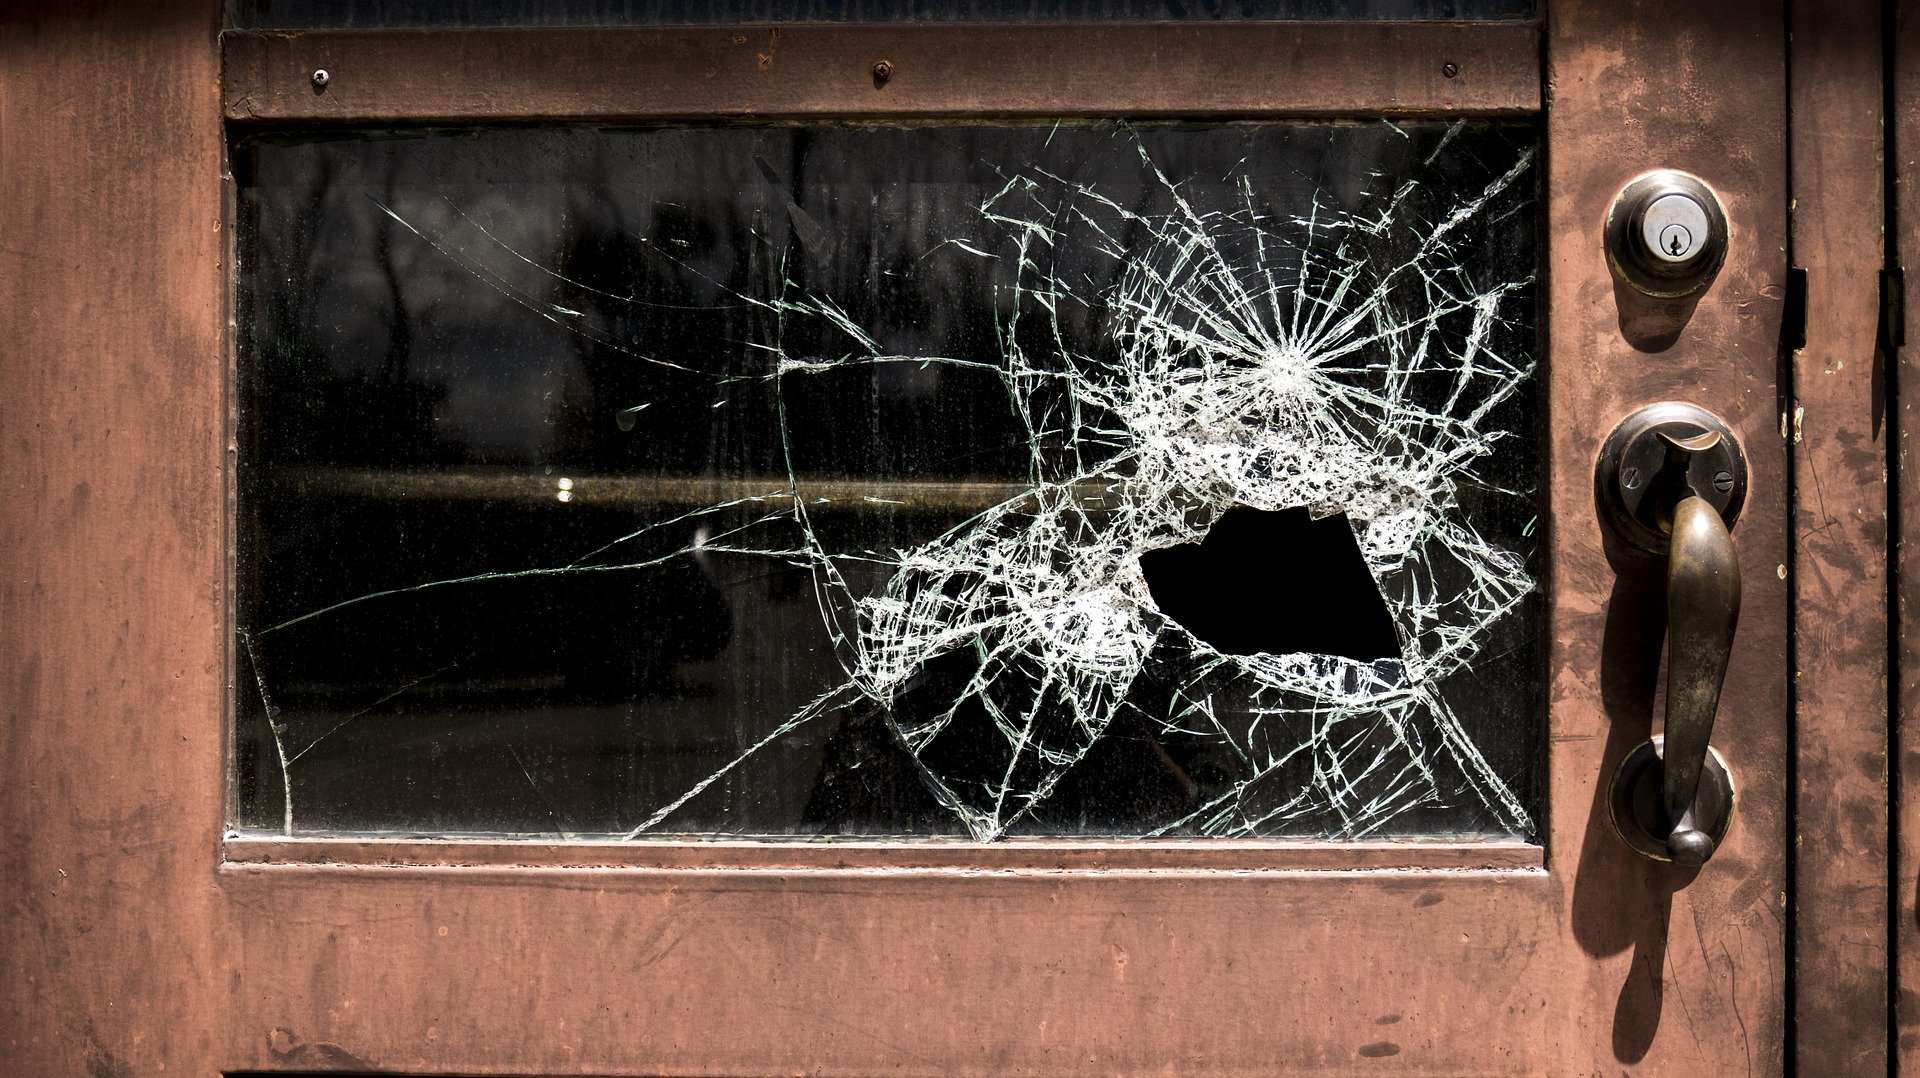 Hammer breaking a window but Not shattering